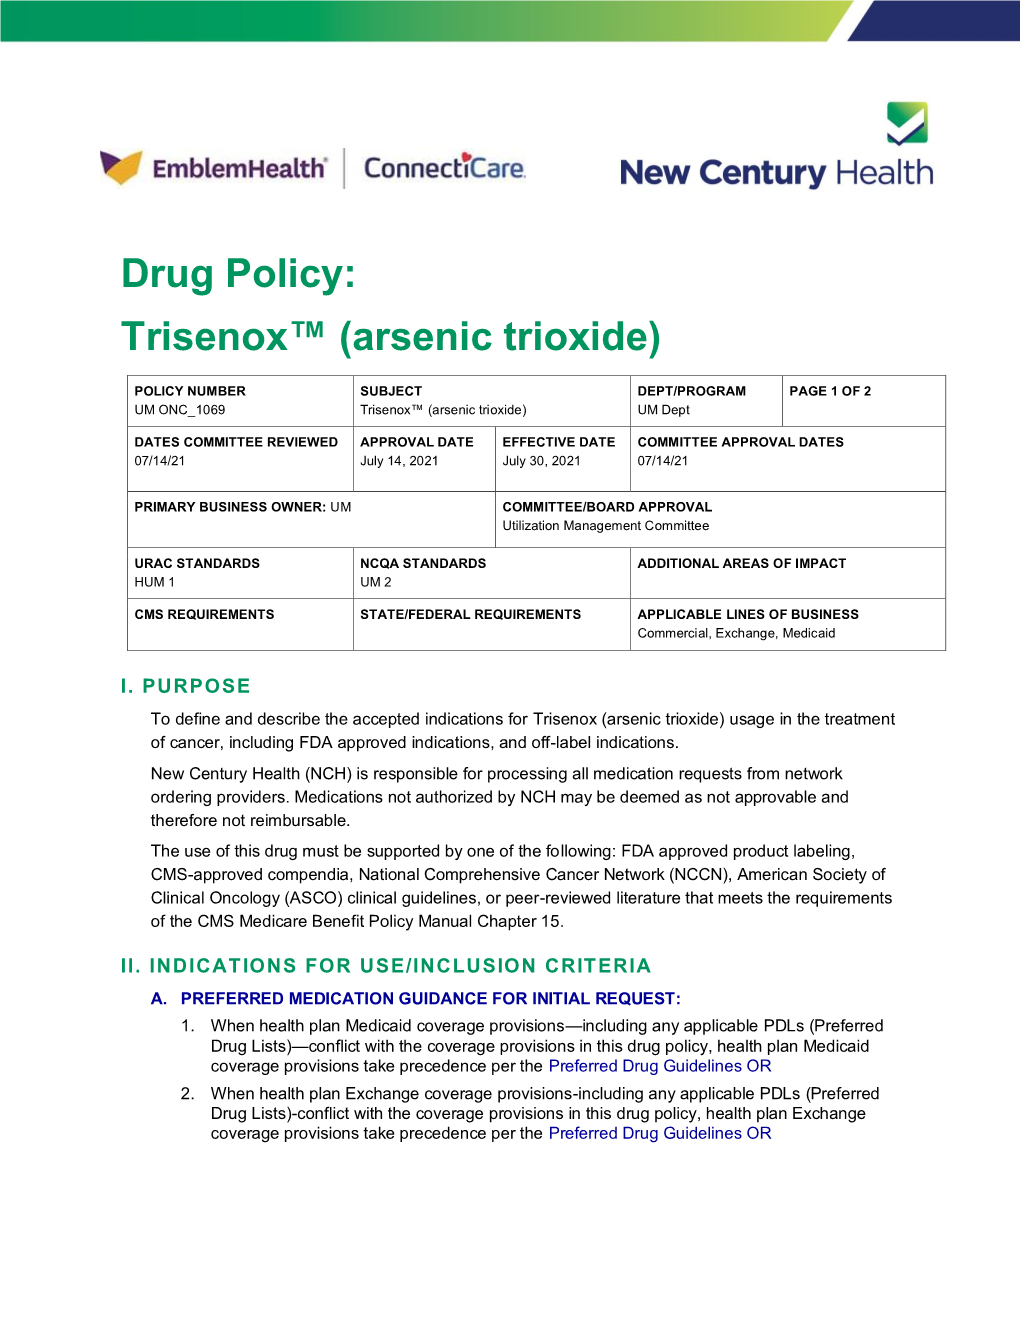 Pharmacy Policy: Trisenox (Arsenic Trioxide)